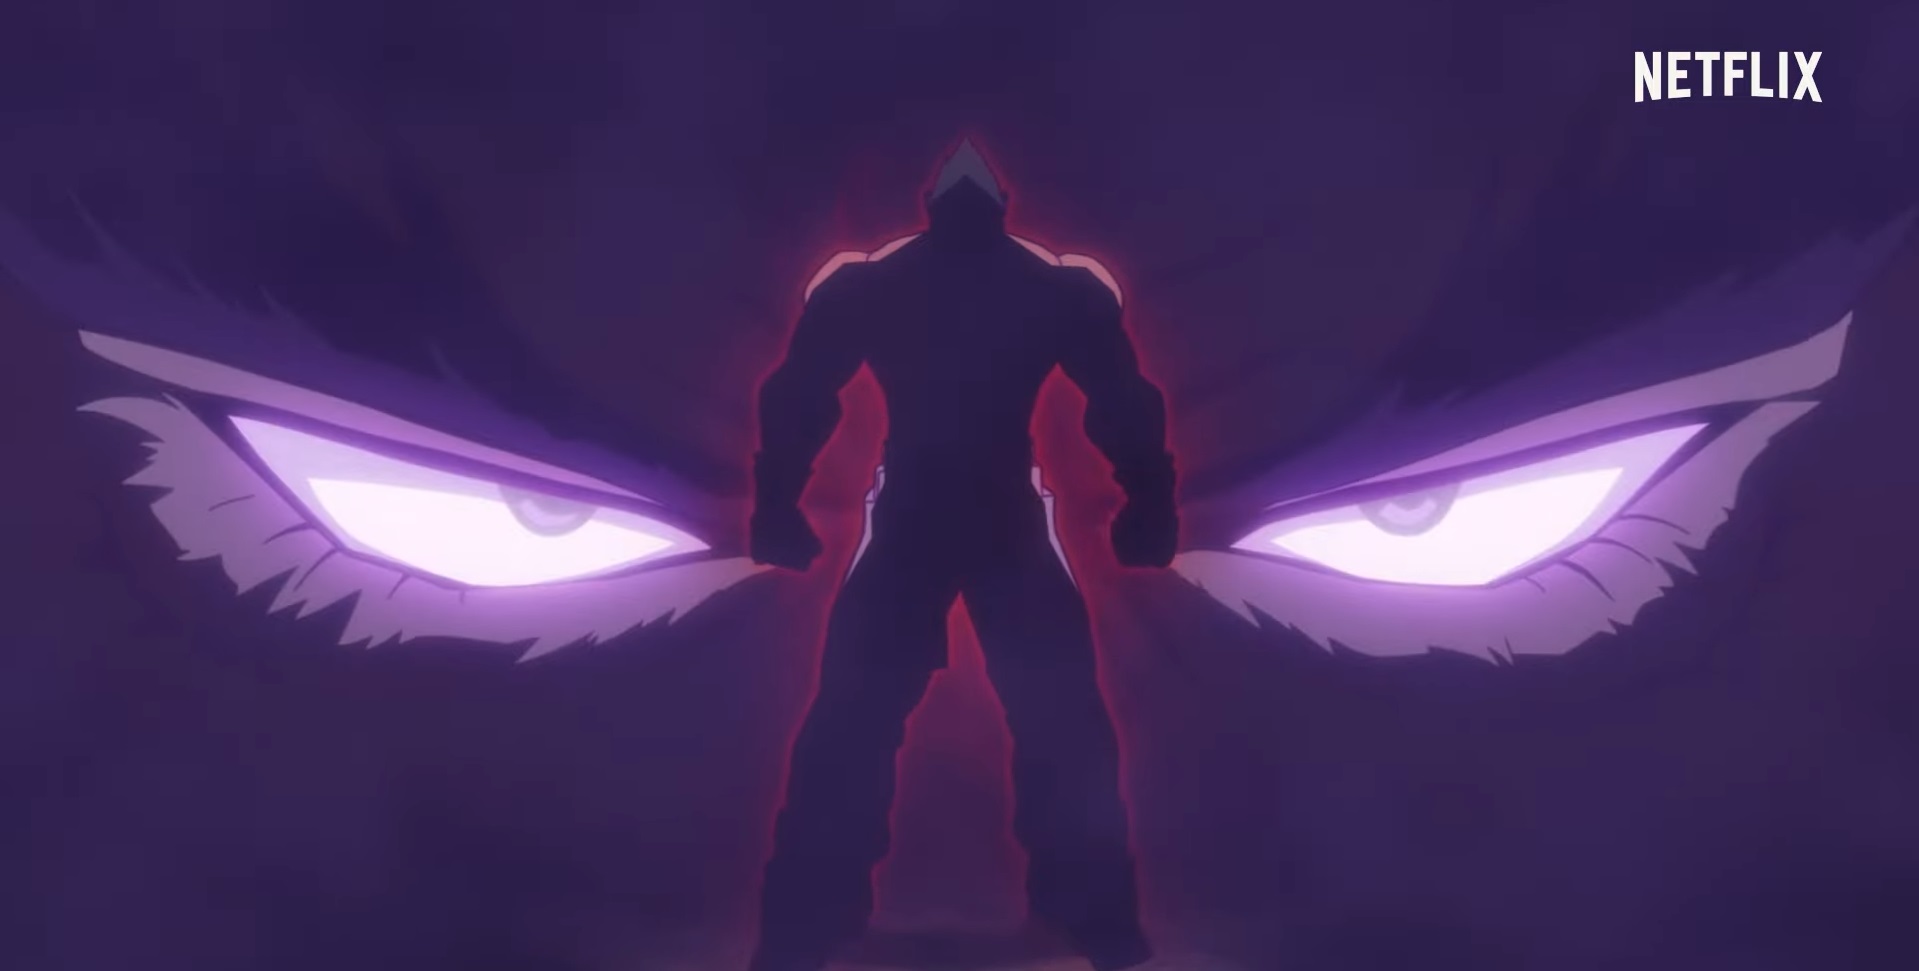 Tekken Bloodline Netflix shares trailer release date for anime series   UPIcom